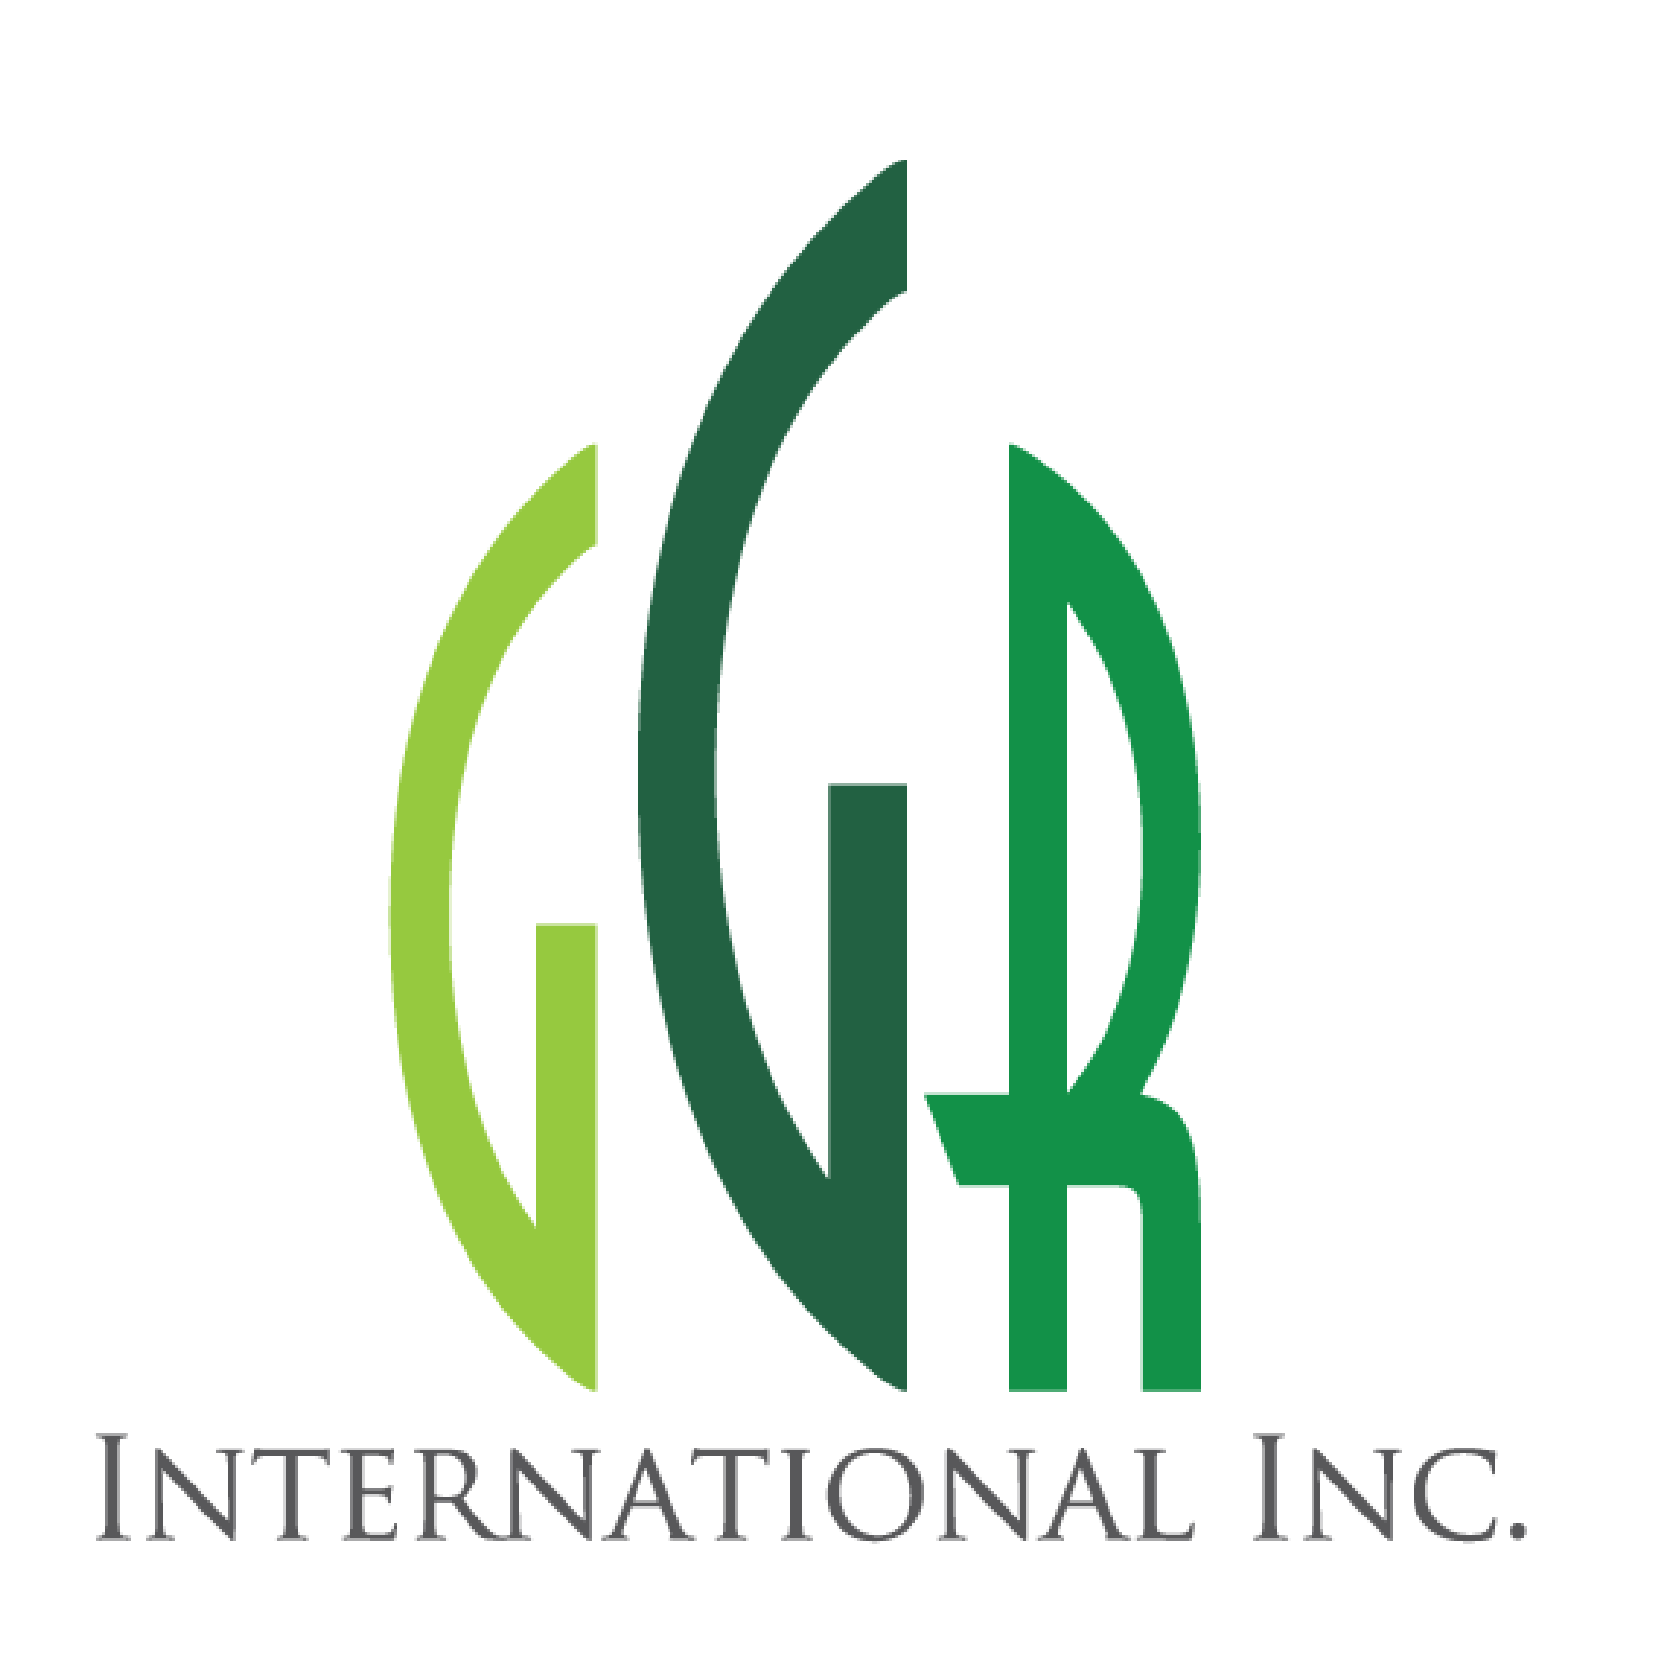 GGR International